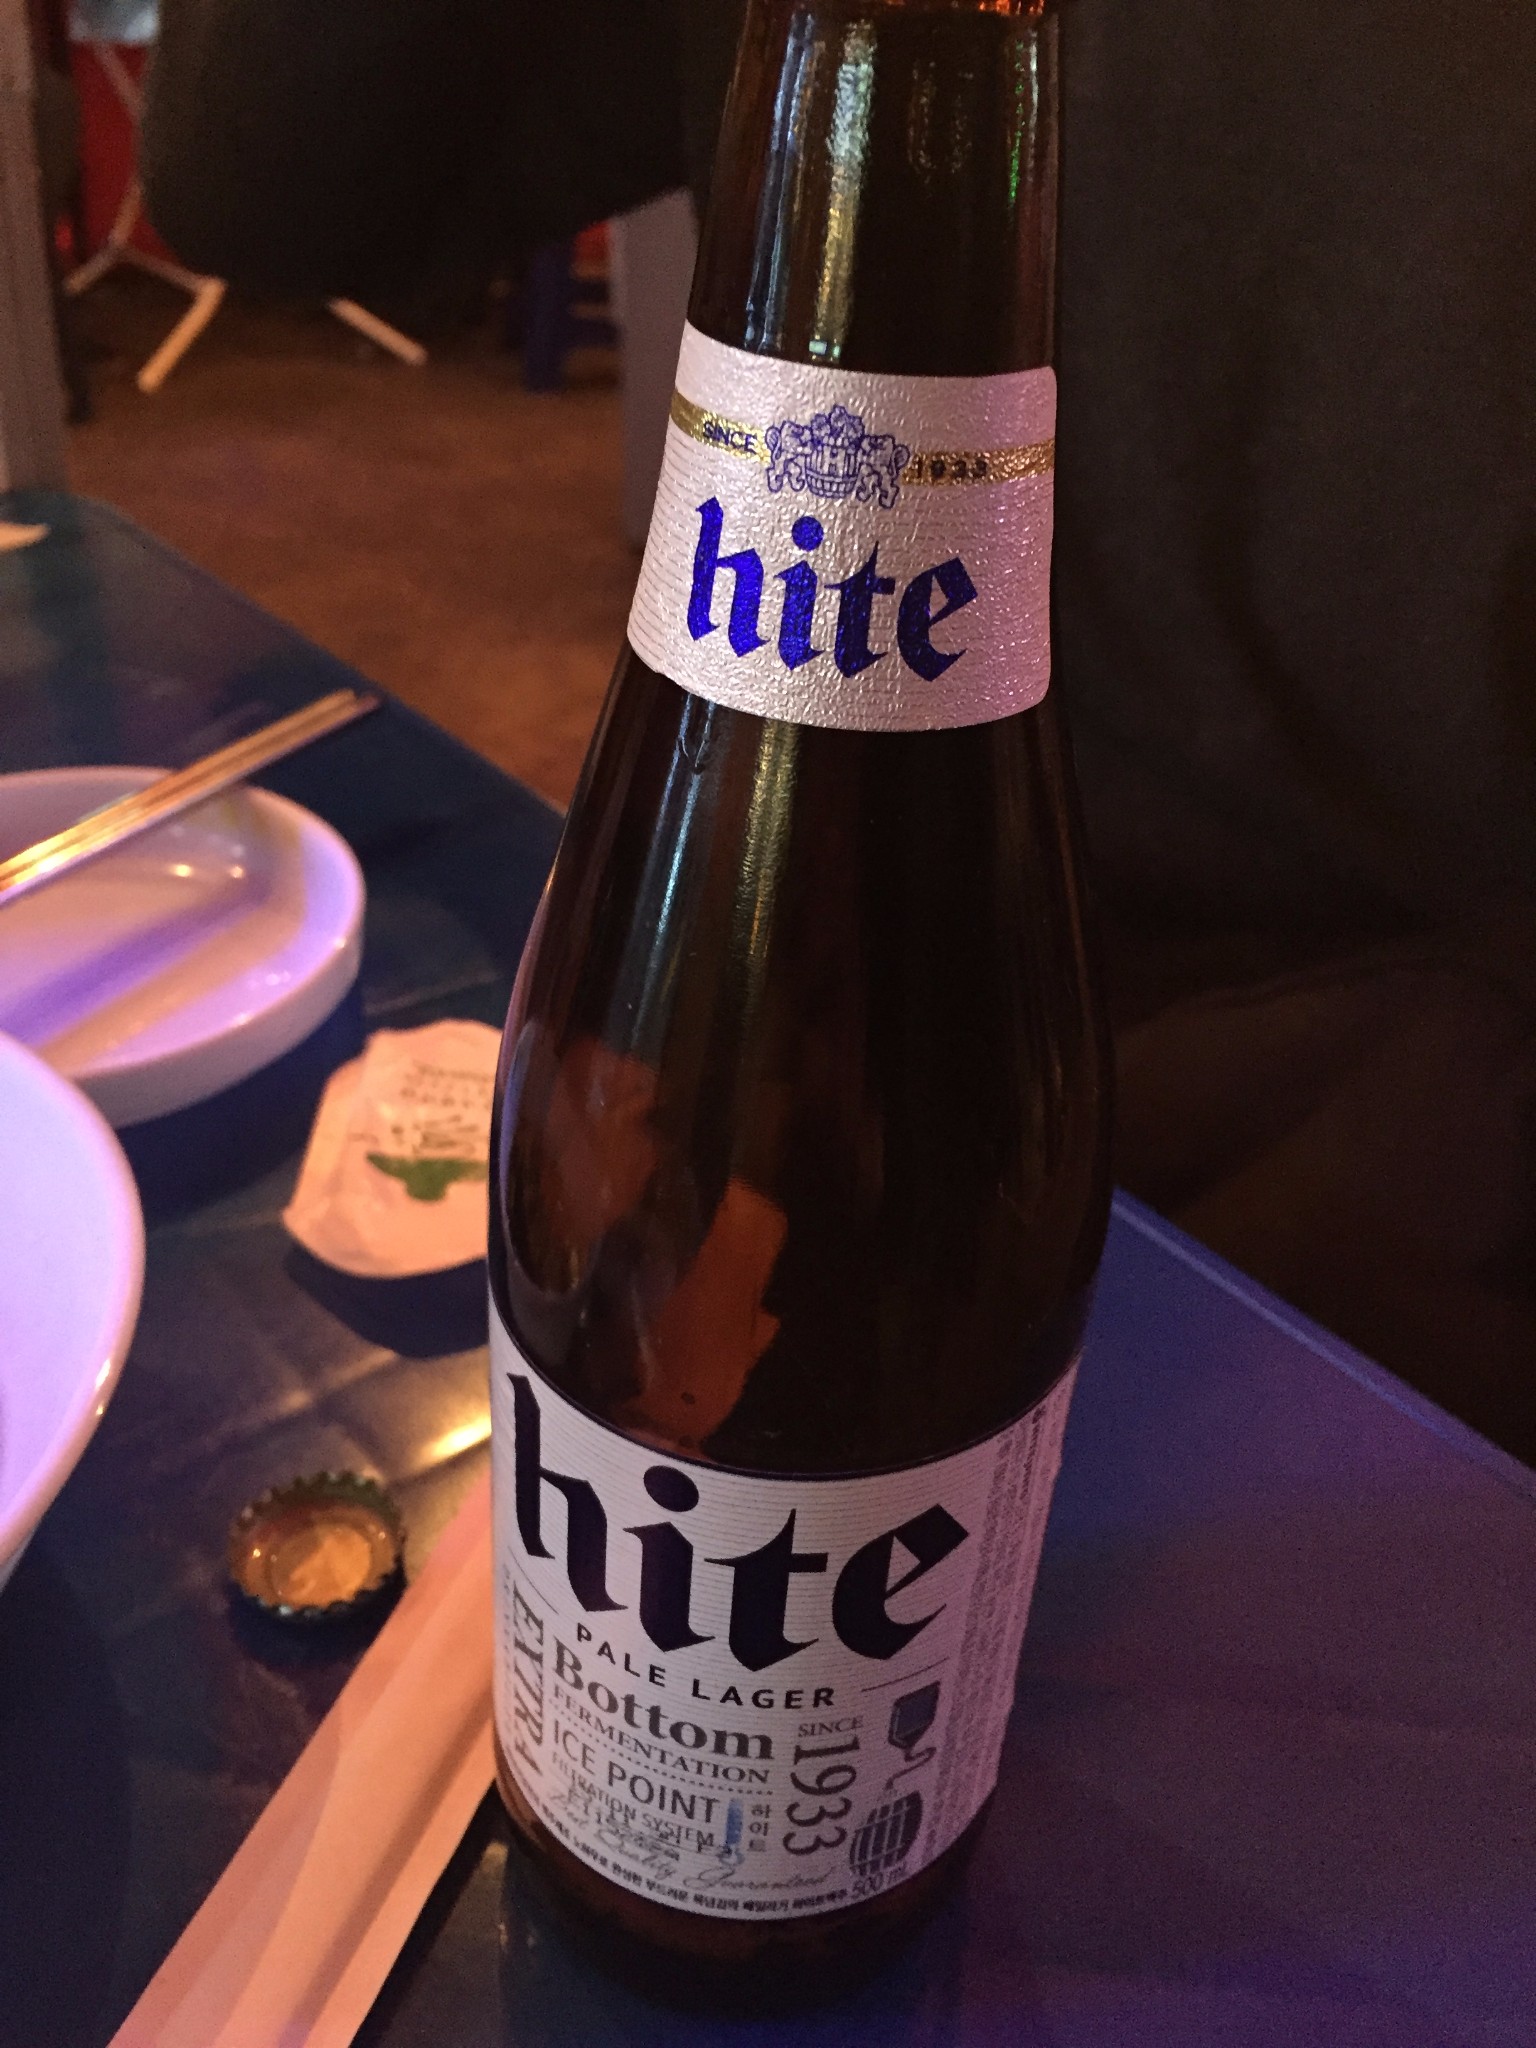 hite啤酒,wuli彬彬代言,比另外一个牌子的啤酒好喝,而且便宜,但是不是